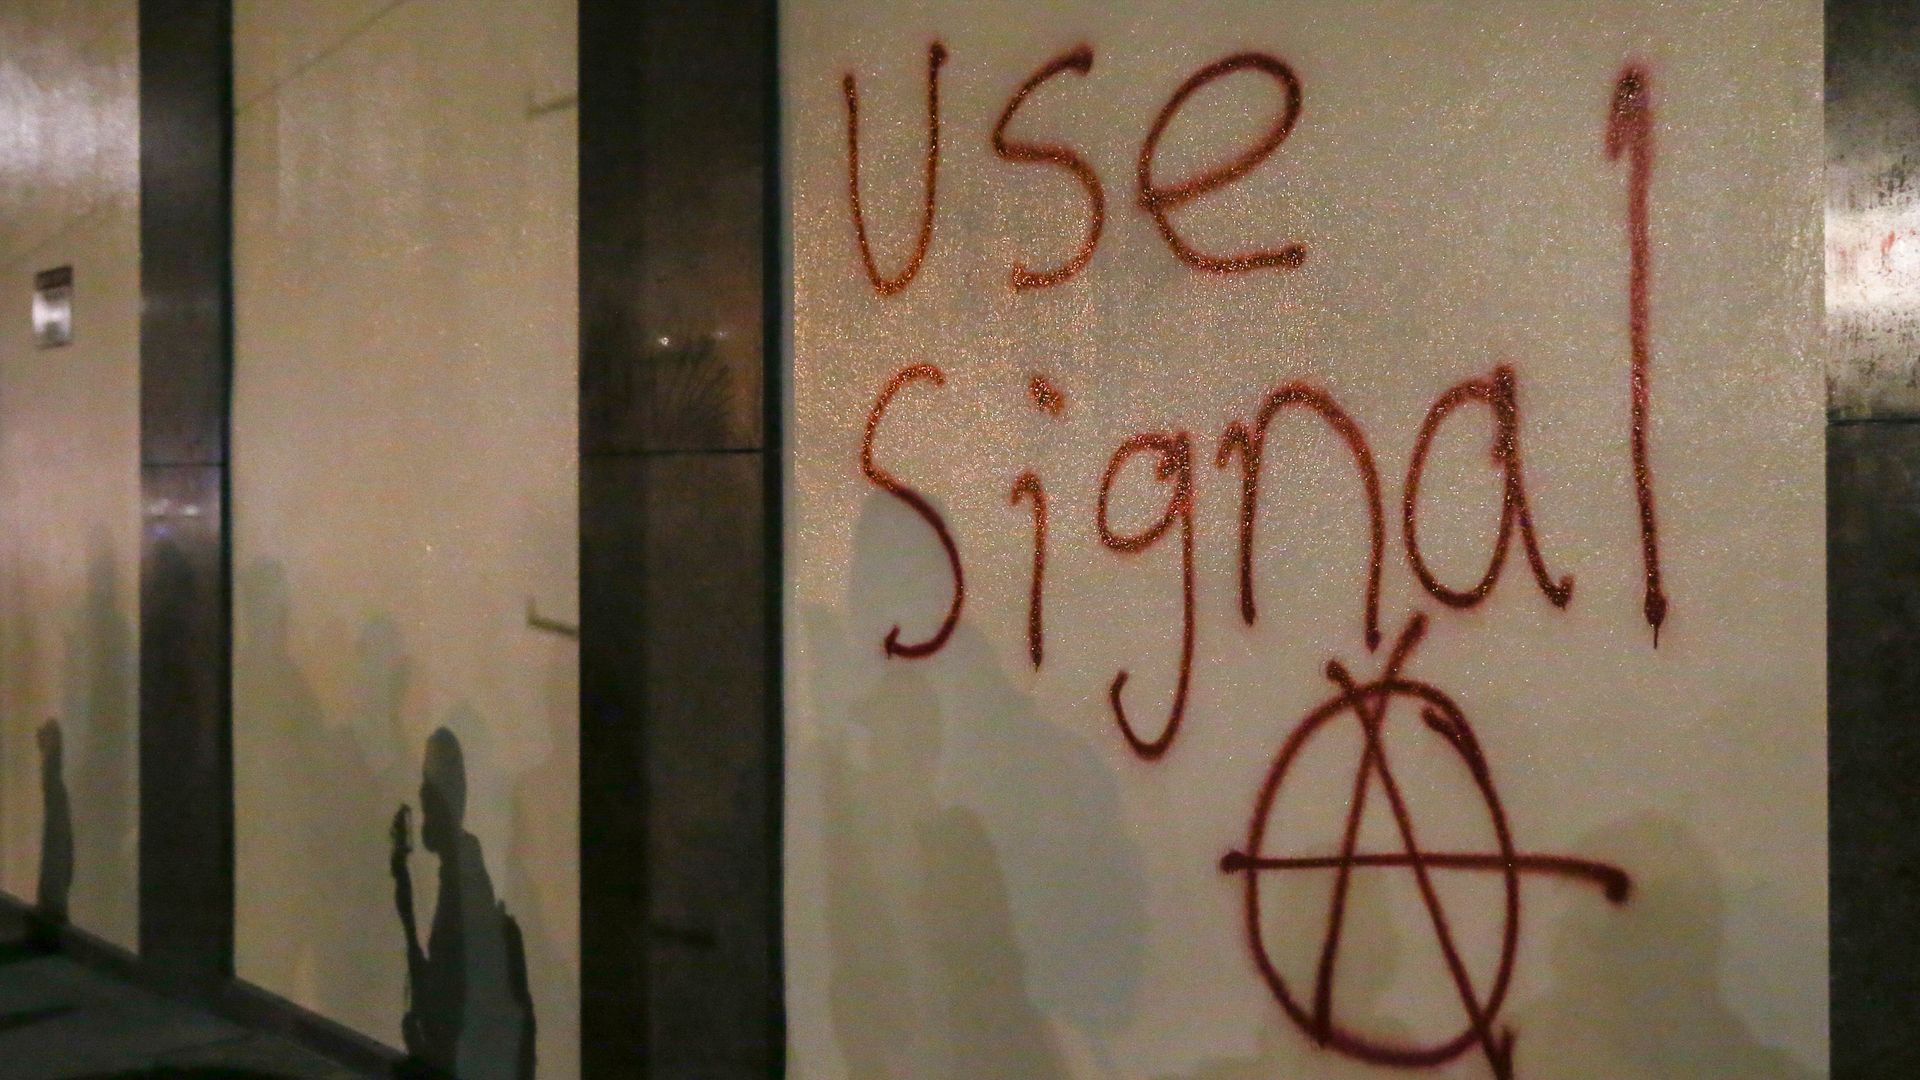 Graffiti reading "Use Signal" above an anarchy symbol. 